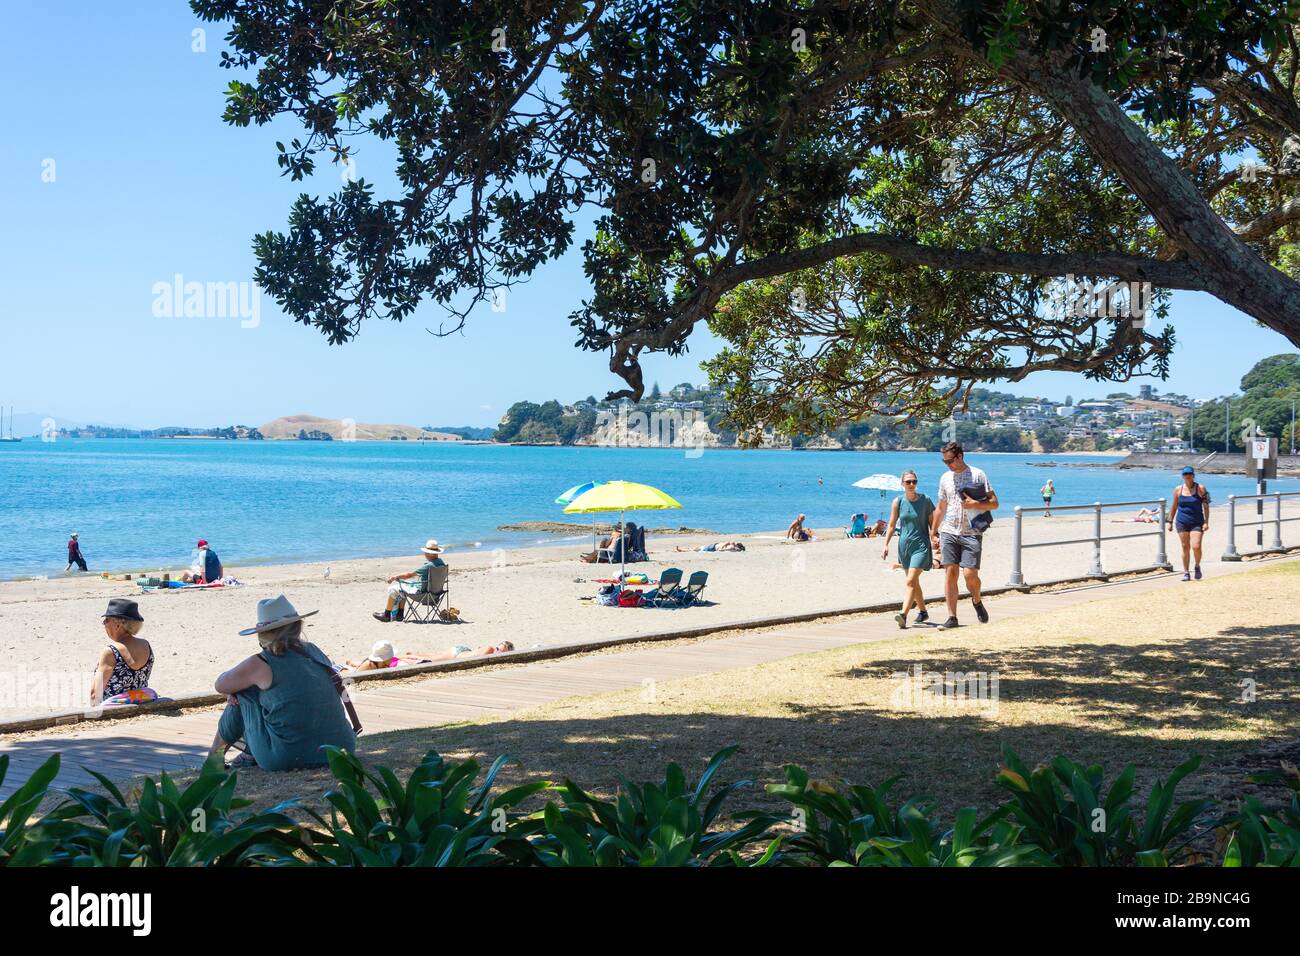 The boardwalk and beach, Kohimarama Beach, Tamaki Drive, Kohimarama, Auckland, New Zealand Stock Photo